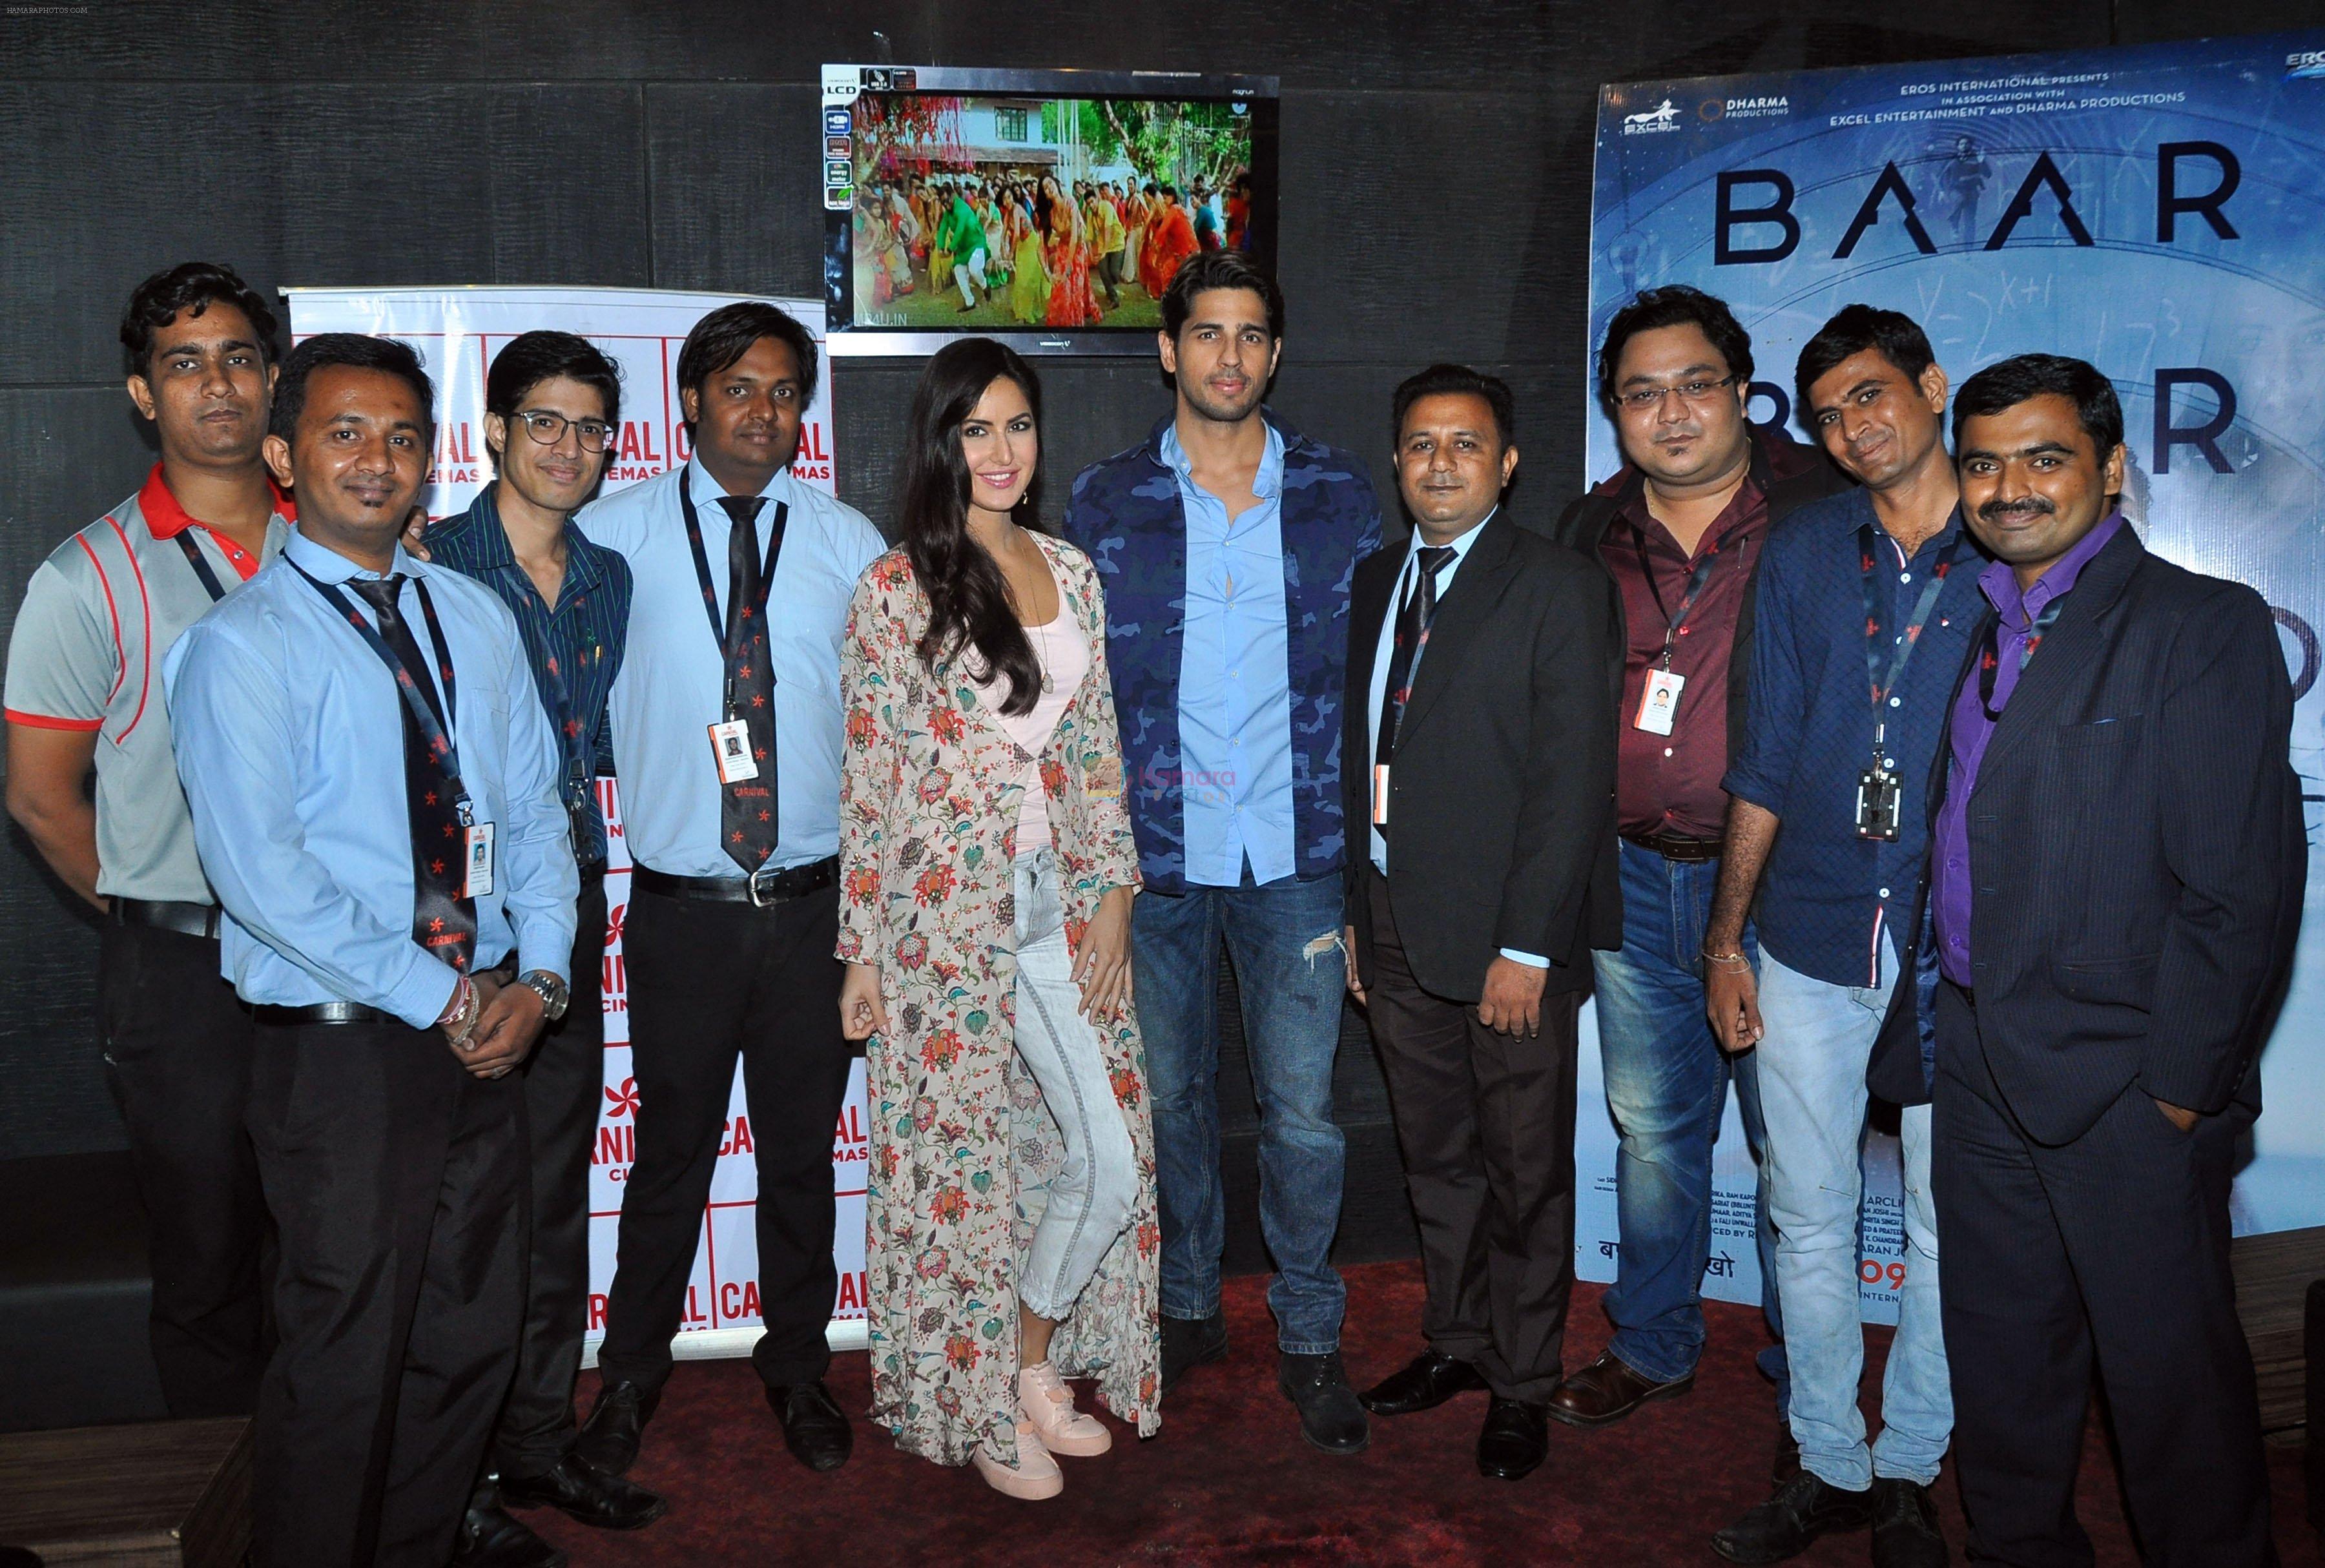 Katrina Kaif and Sidharth Malhotra promote Baar Baar Dekho in Ahmedabad at Carnival Cinemas on 30th Aug 2016